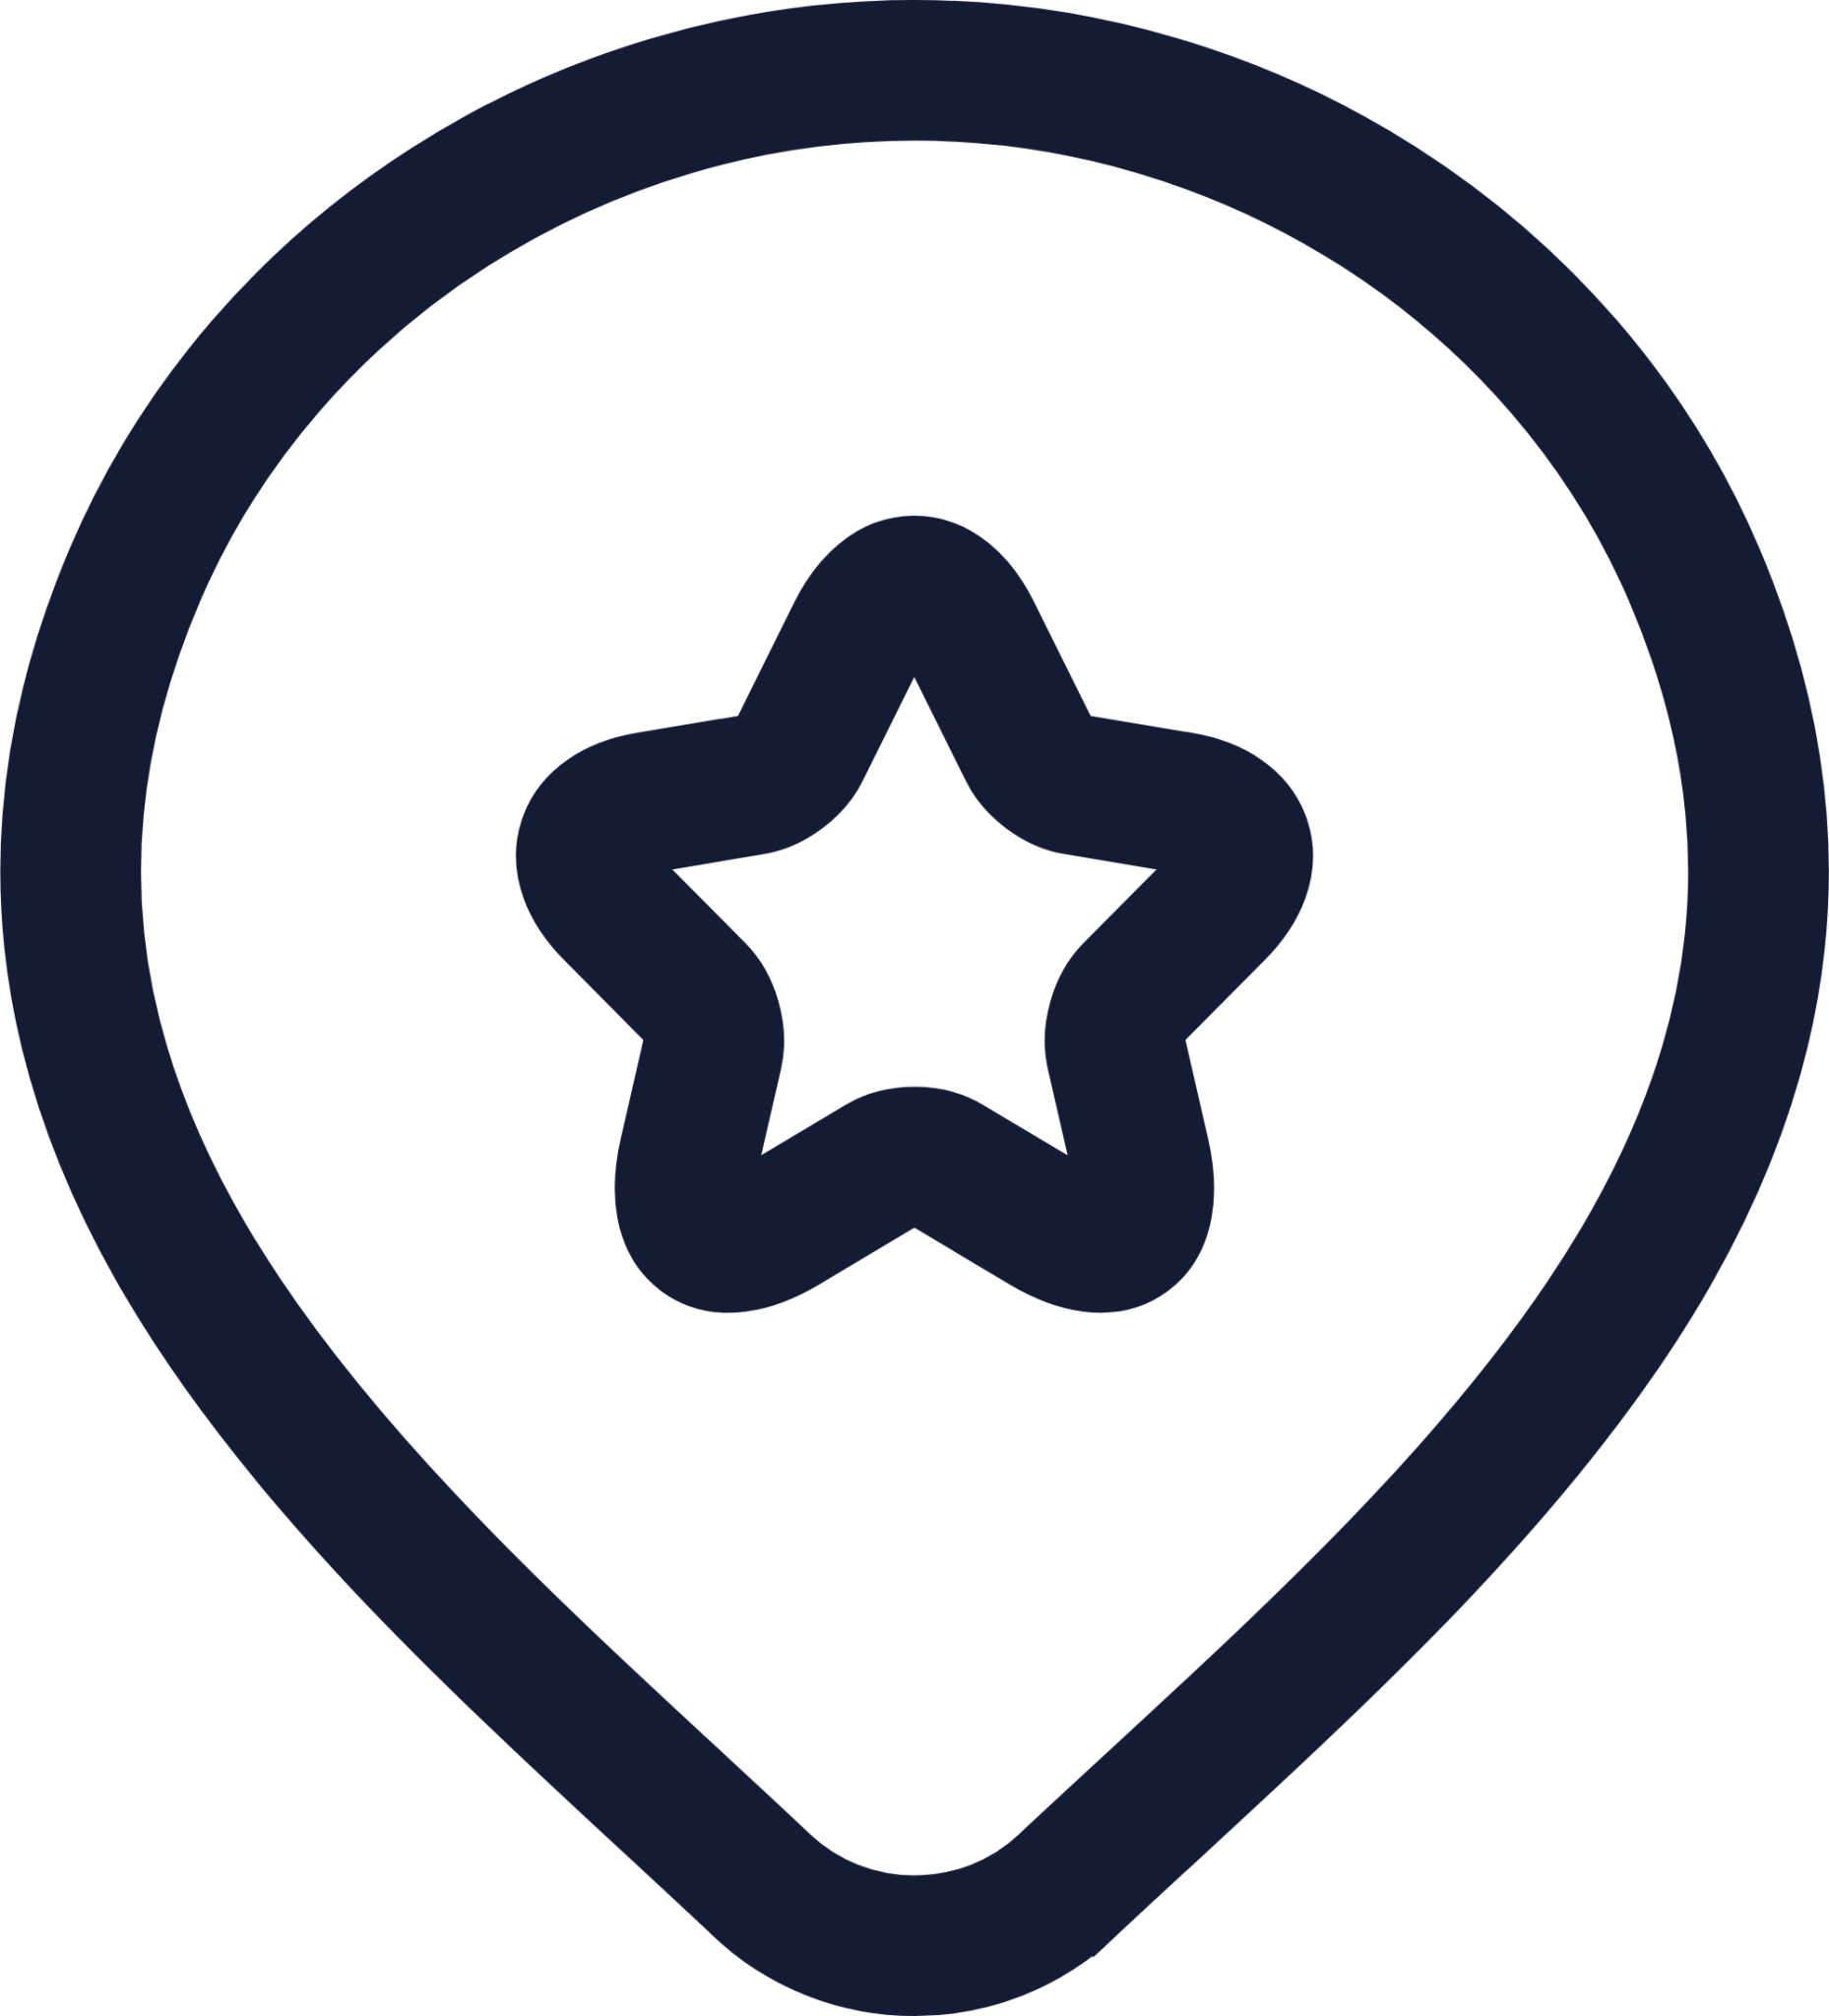 location star icon